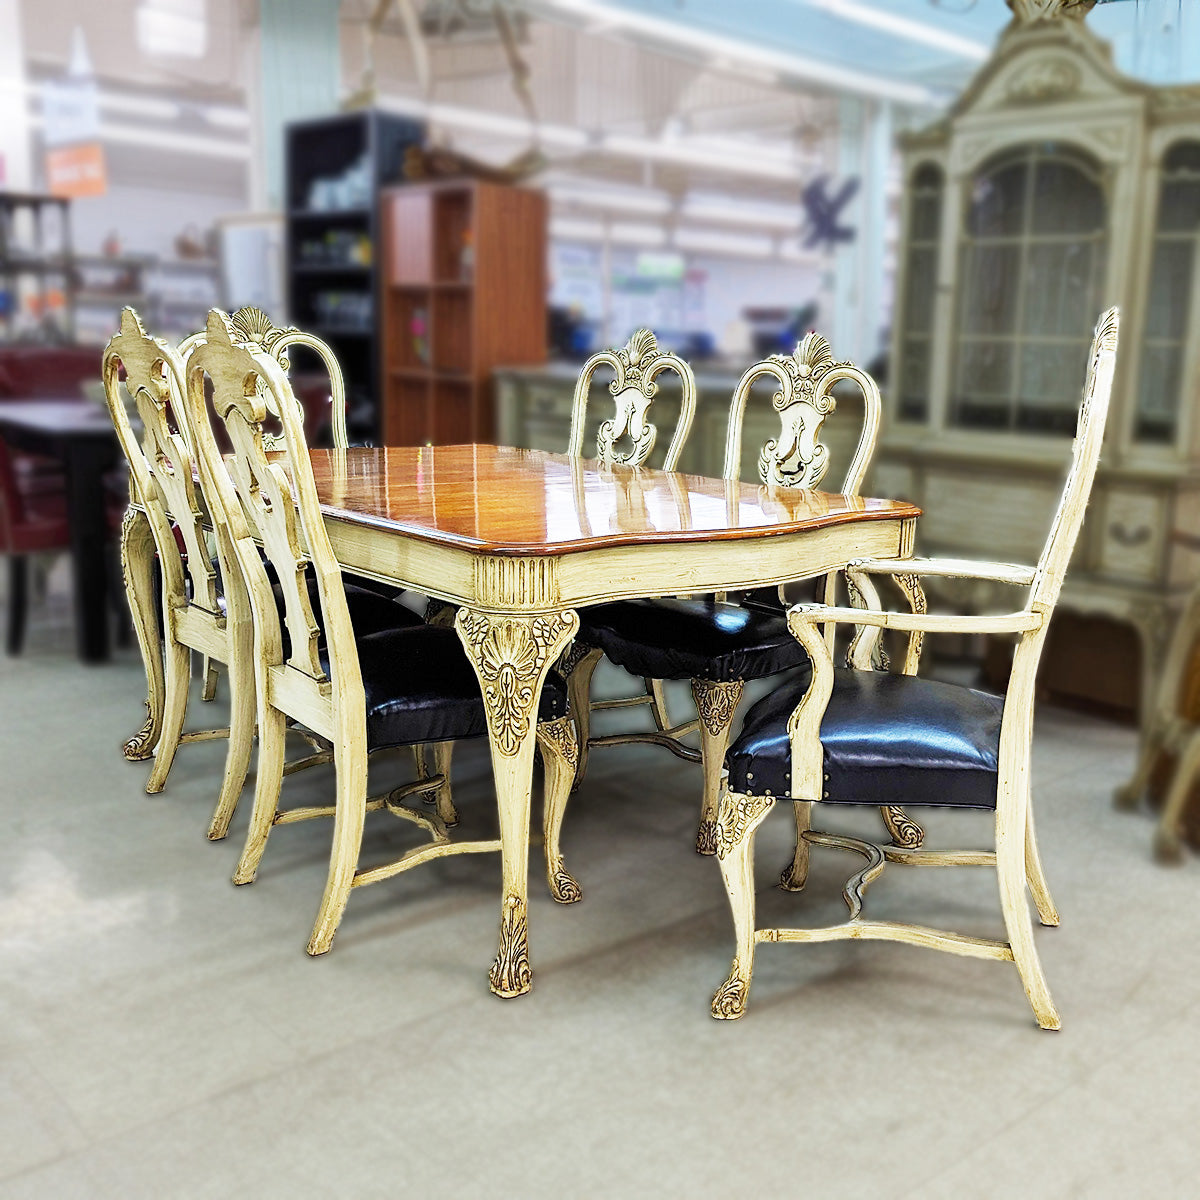 SET French Provincial Dining Room Furniture - Habroc - Online ReStore